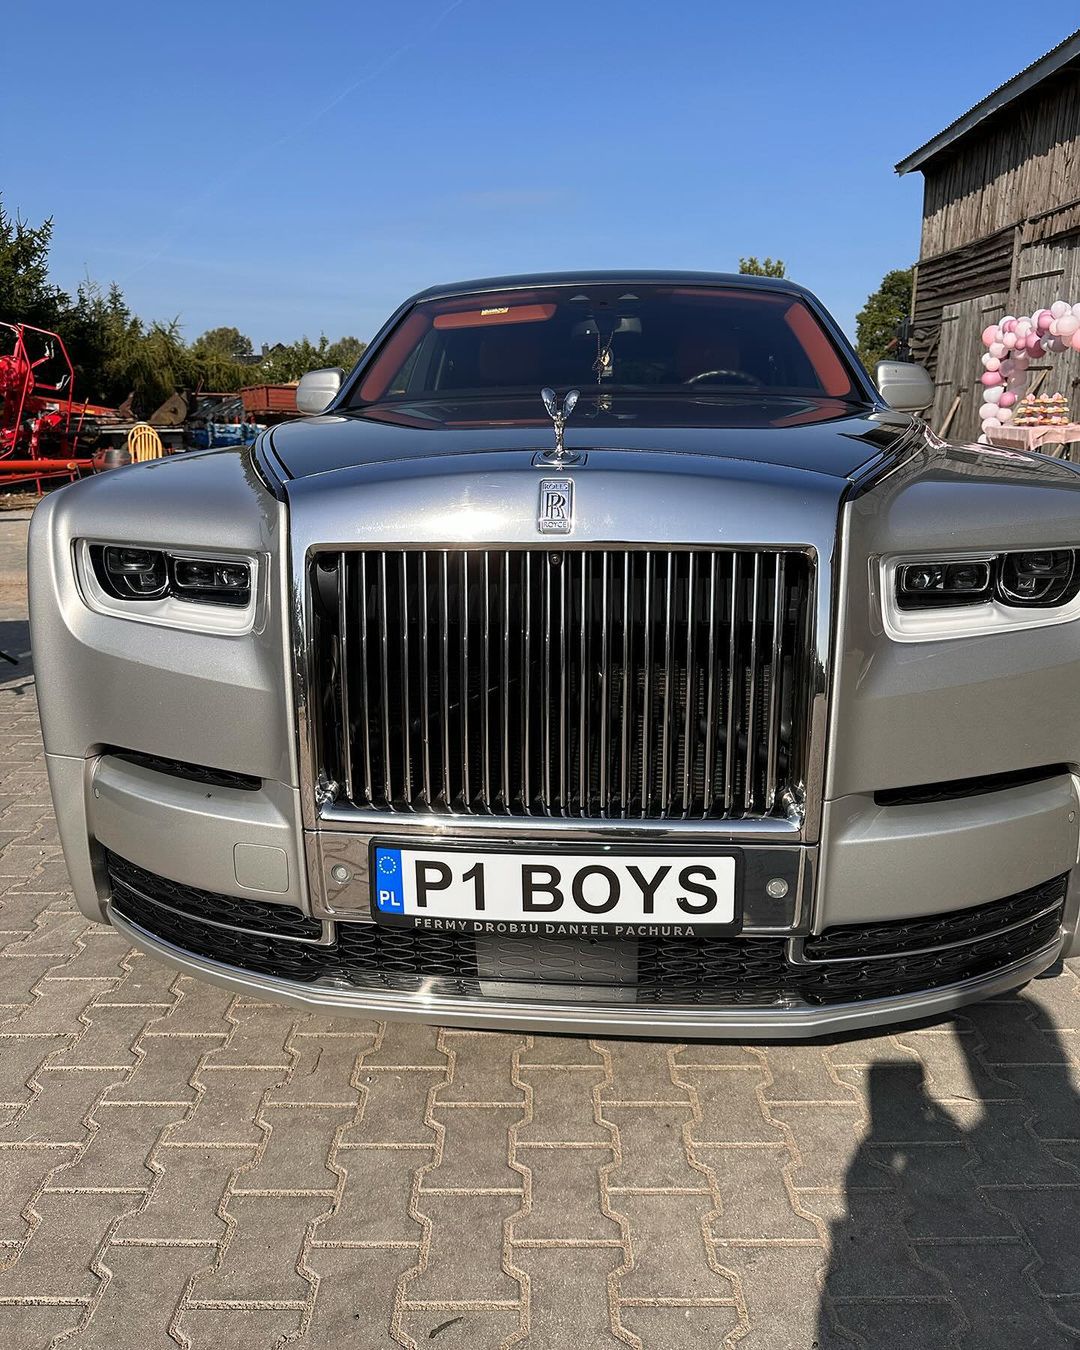 Marcin Miller pokazał warty krocie samochód (fot. Instagram)